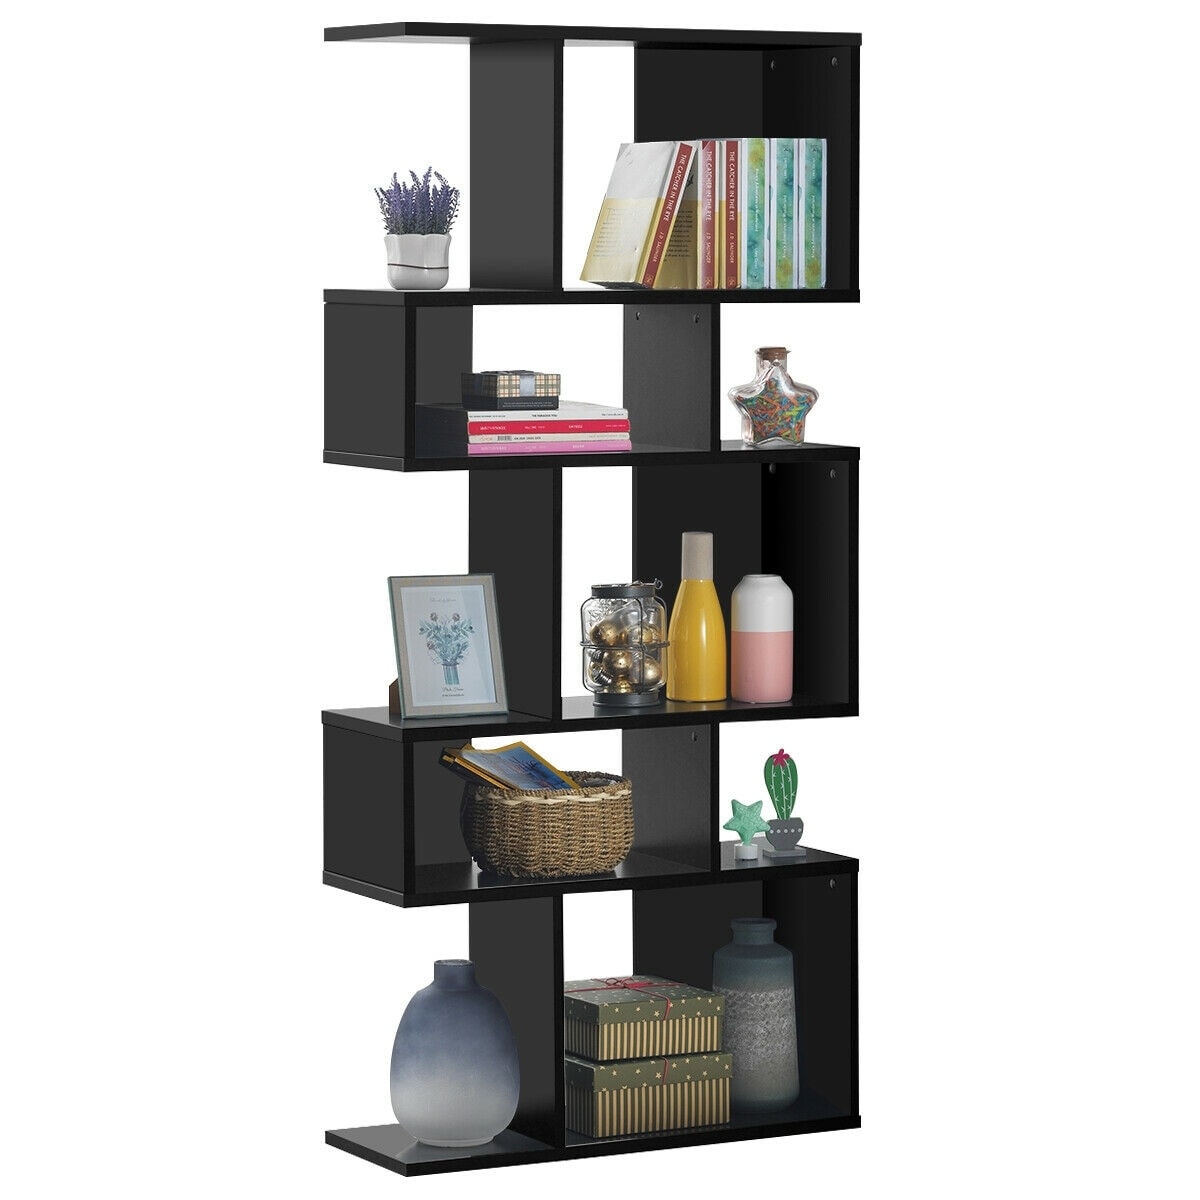 https://ak1.ostkcdn.com/images/products/is/images/direct/781438bef0857211ad2ea9df2331c6b4195df430/5-Cubes-Ladder-Shelf-Corner-Bookshelf-Display-Rack-Bookcase-Black.jpg